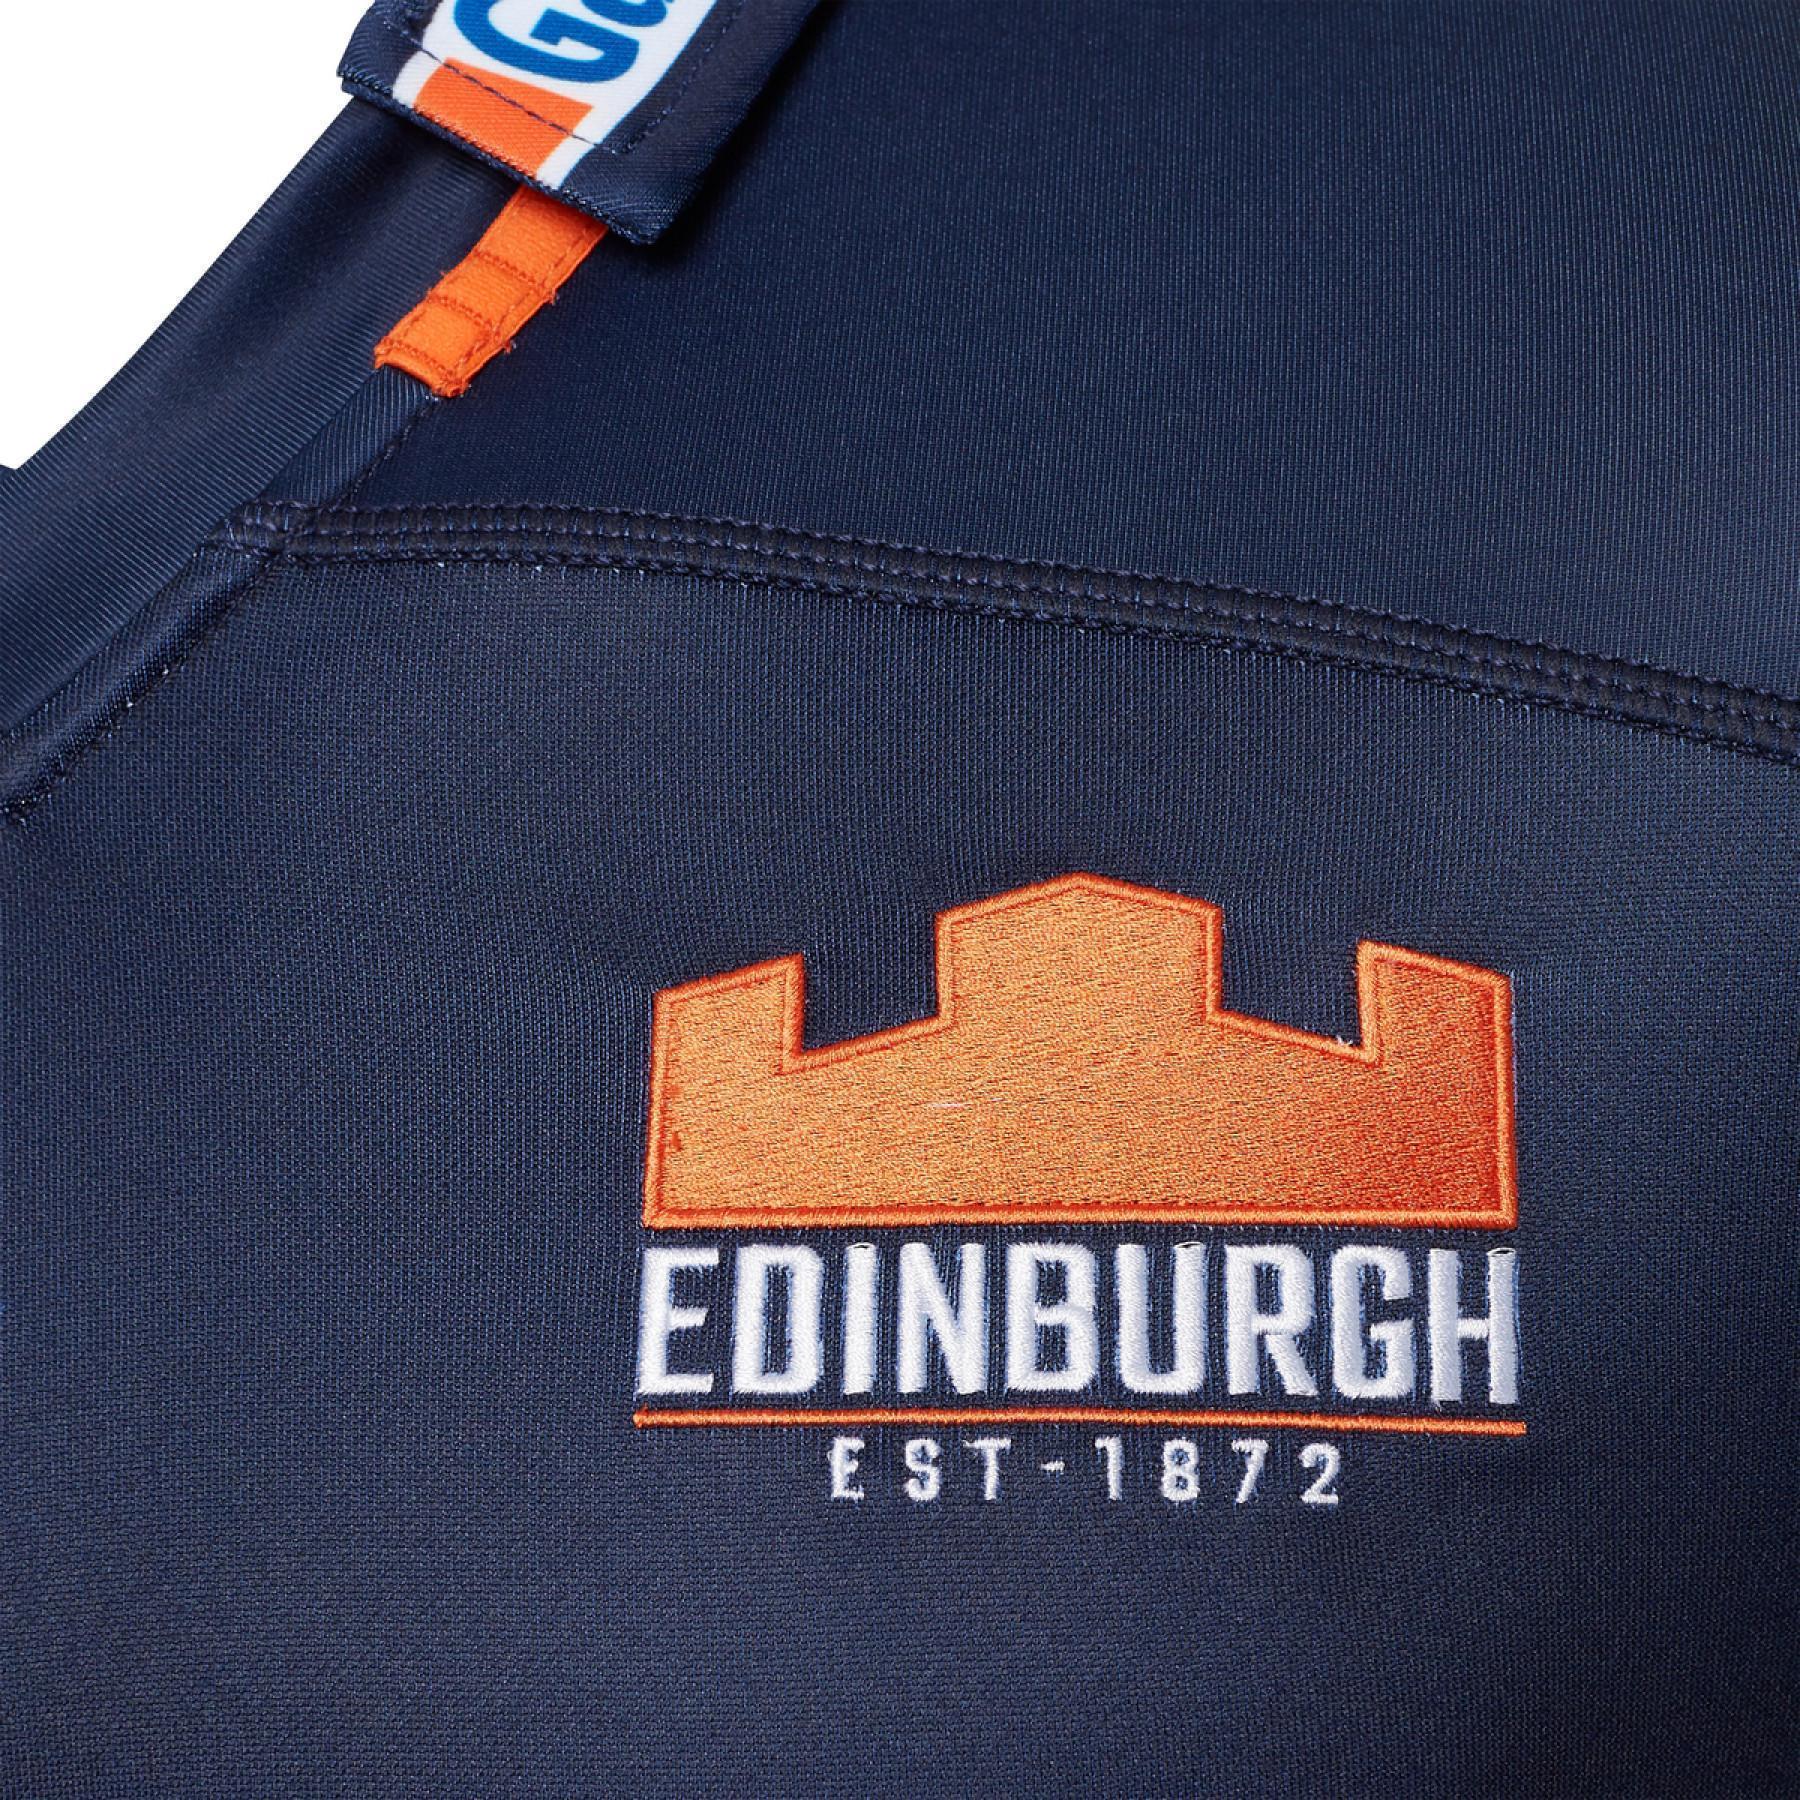 Camiseta de casa Edinburgh rugby 2020/21